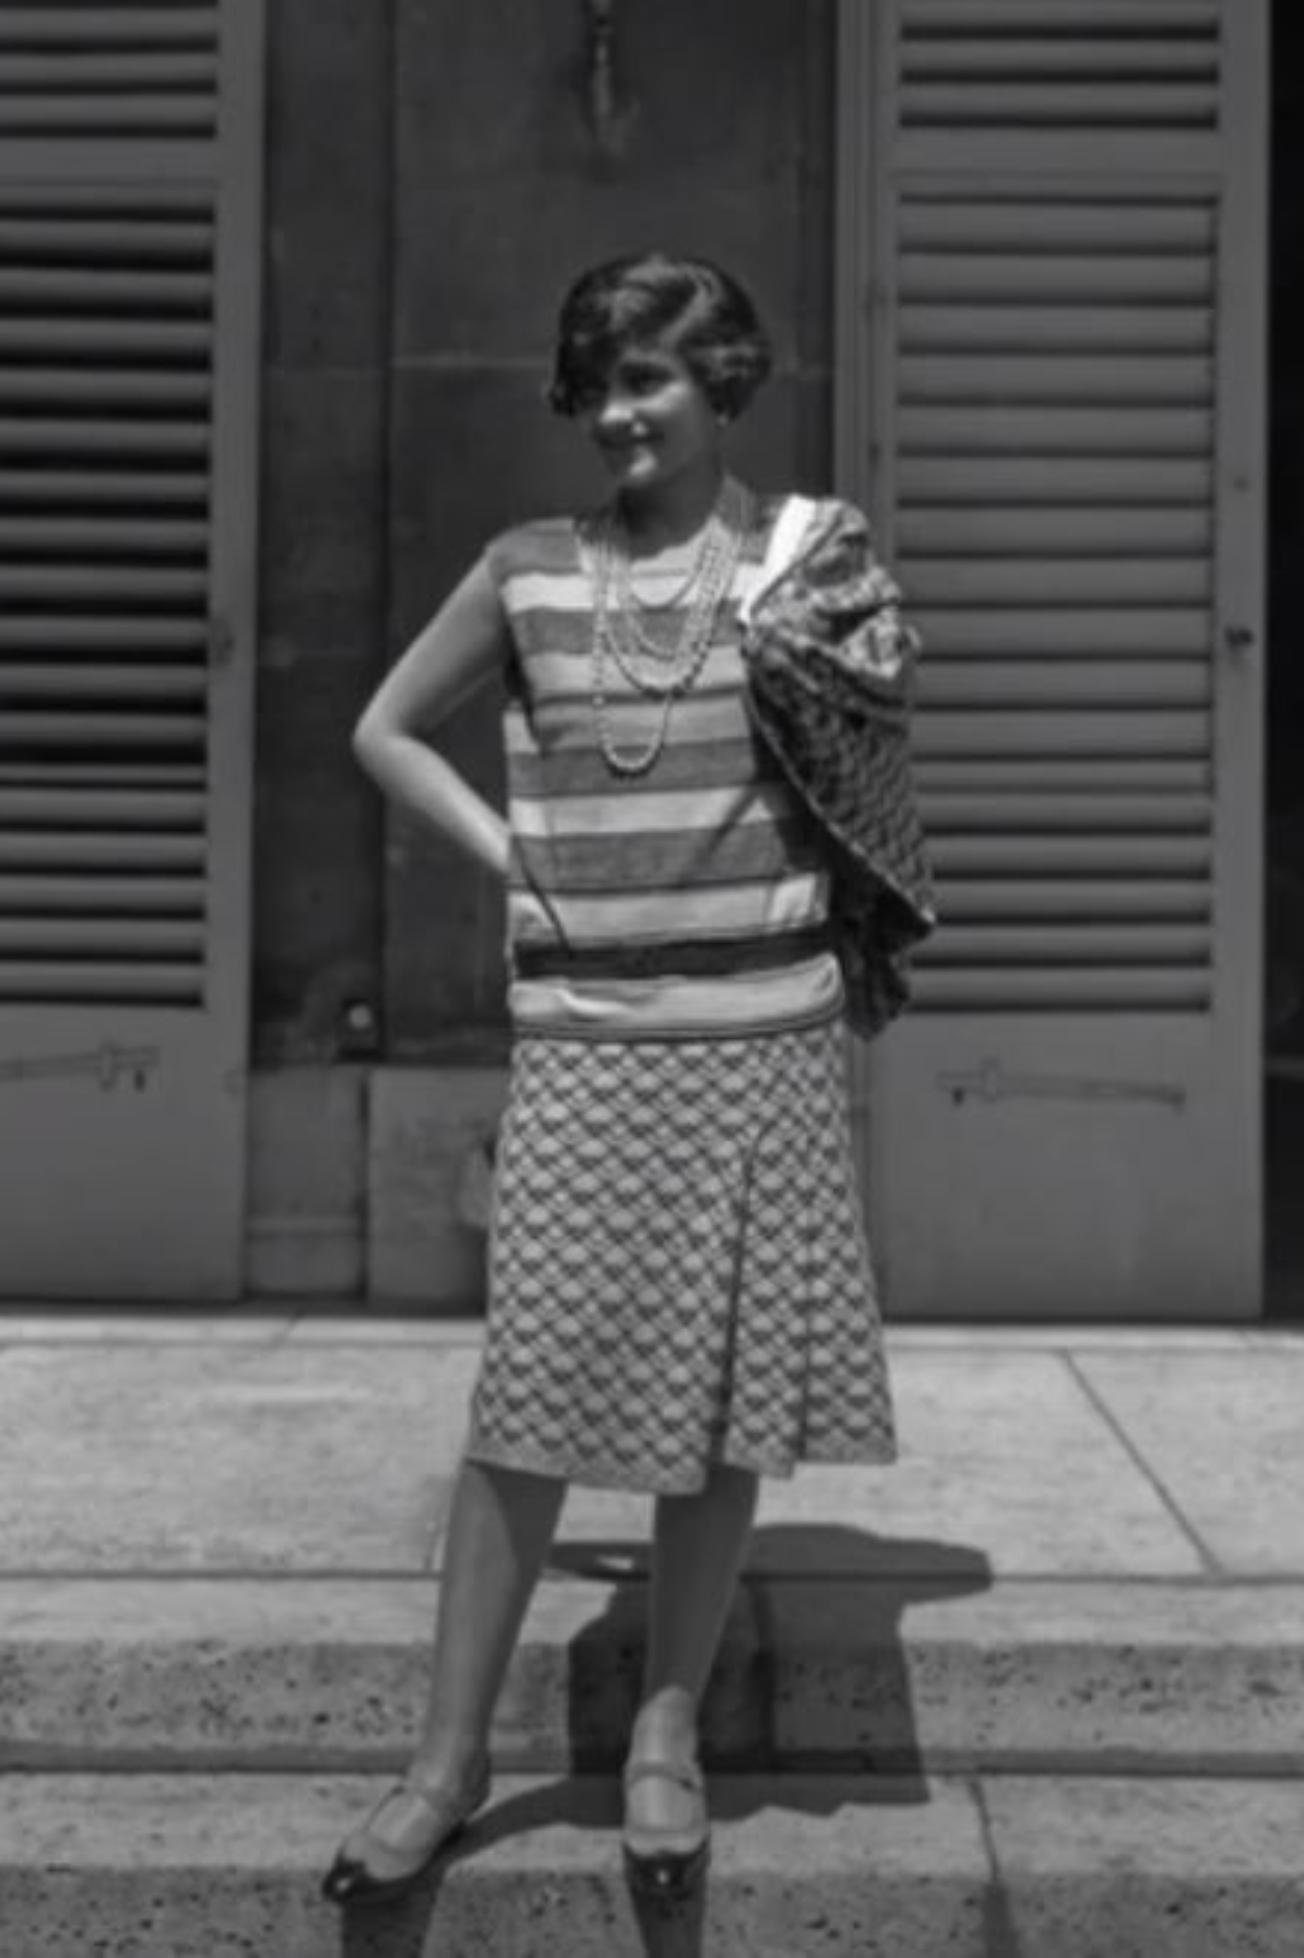 Coco Chanel: Η γυναίκα θρύλος που άλλαξε την ιστορία της μόδας – Η σκοτεινή παιδική ηλικία η θυελλώδης προσωπική ζωή και η μεγαλειώδης καριέρα